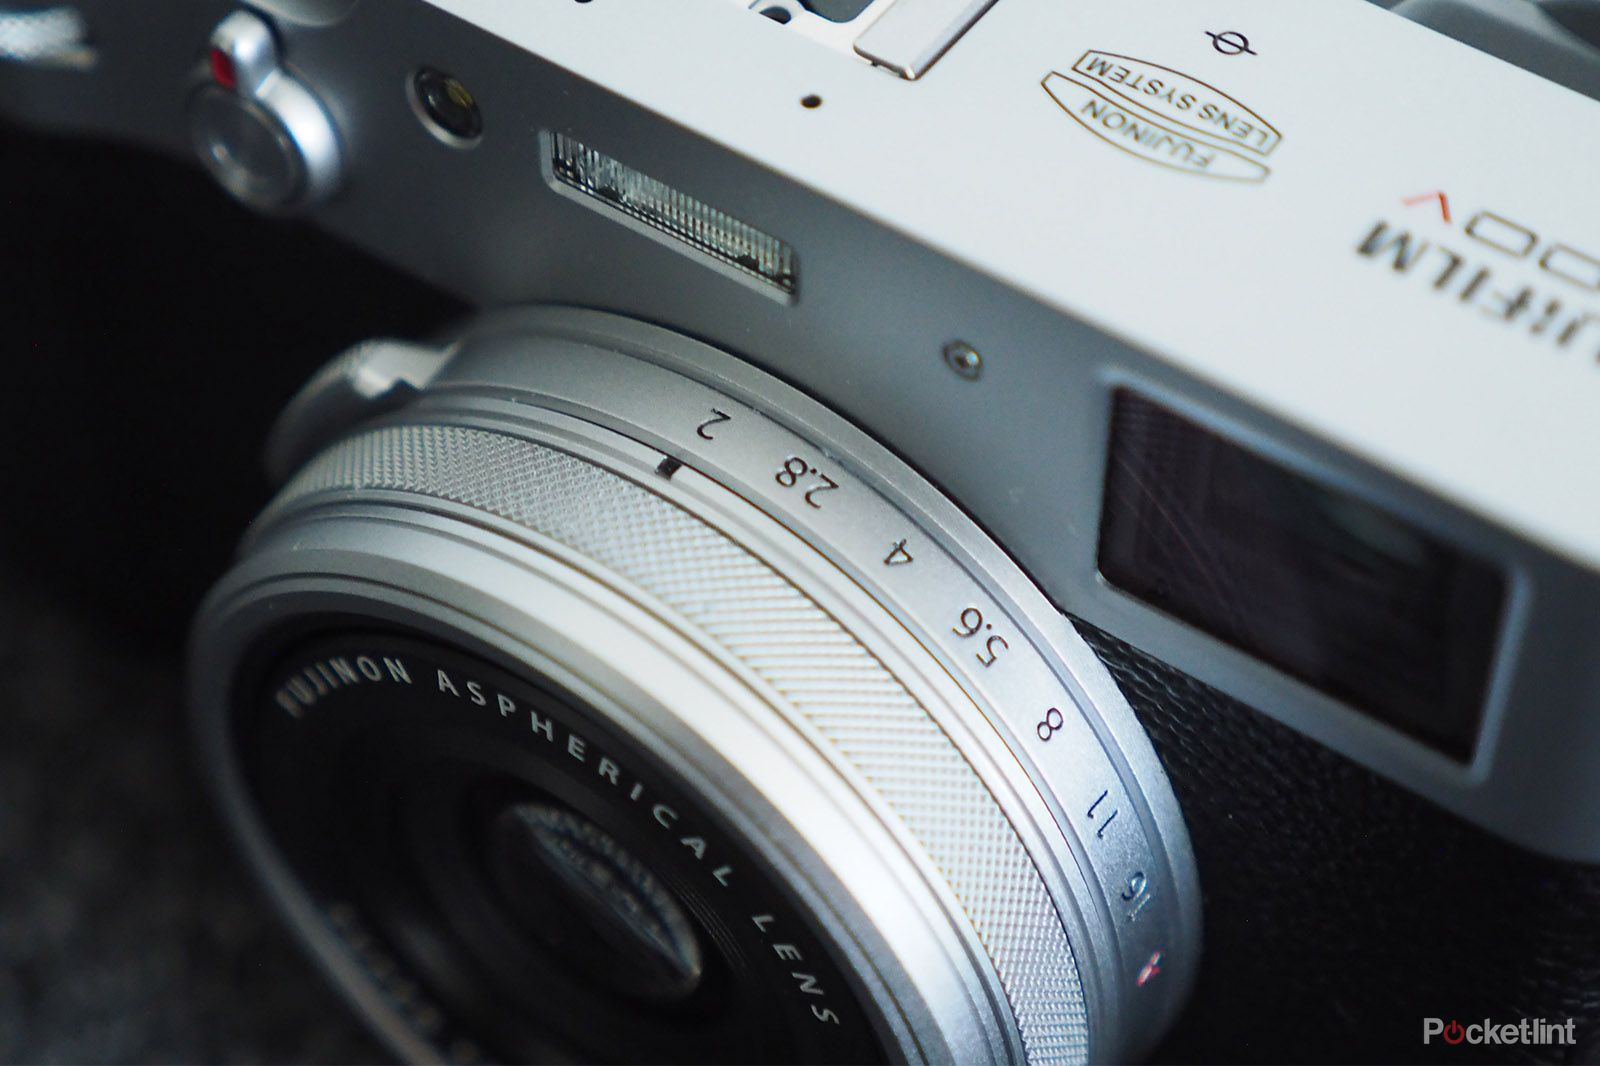 Fujifilm X100V review image 1